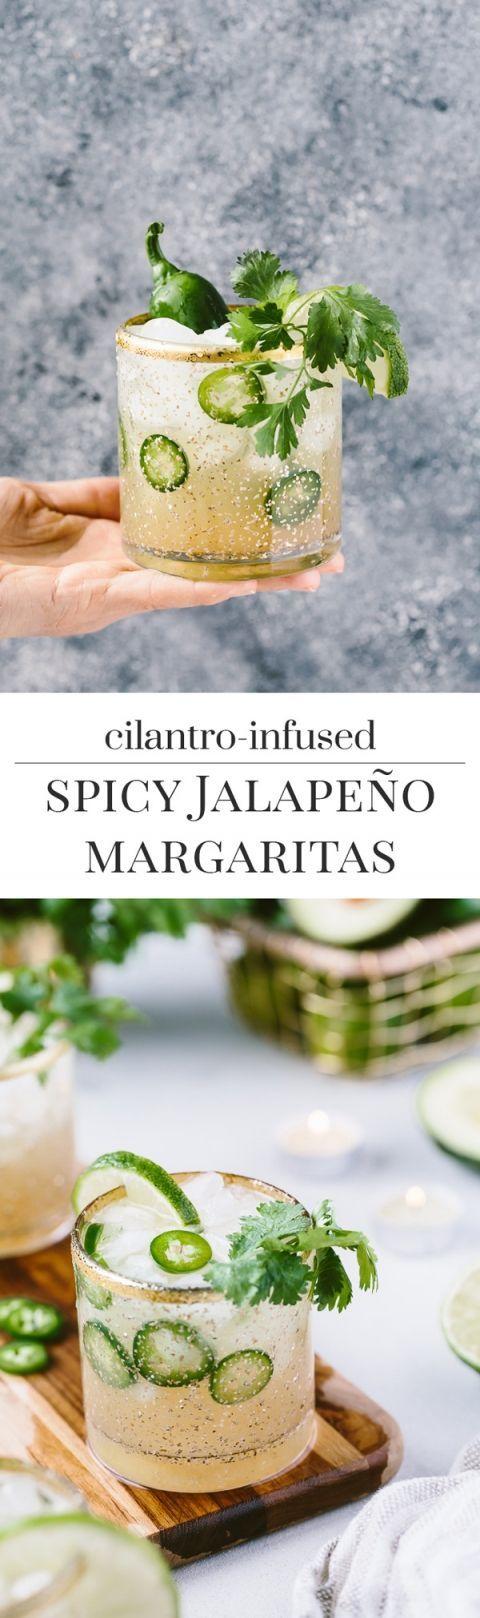 Wedding - Cilantro-Infused Spicy Jalapeno Margaritas